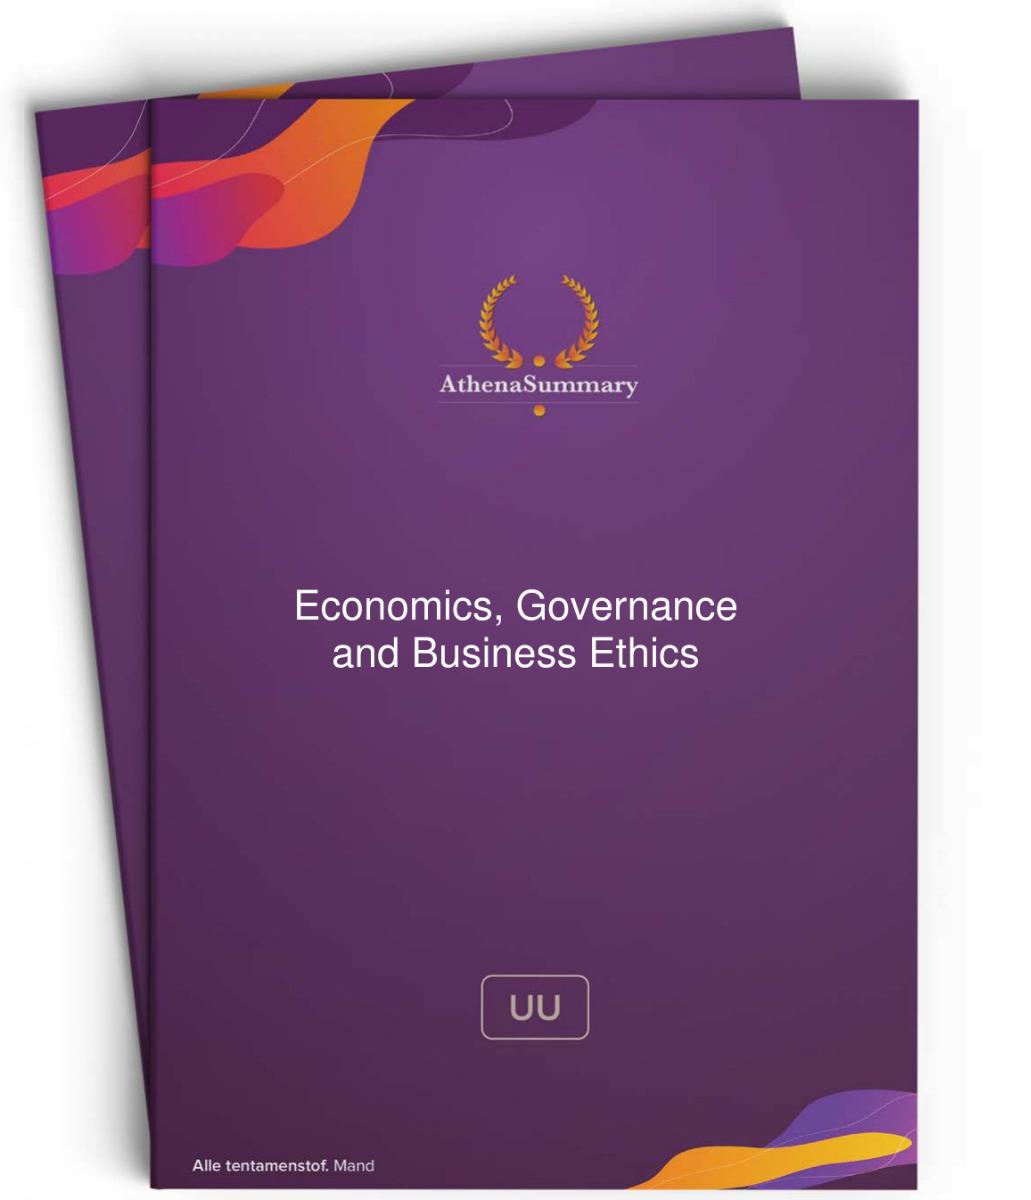 Literature Summary: Economics, Governance and Business Ethics